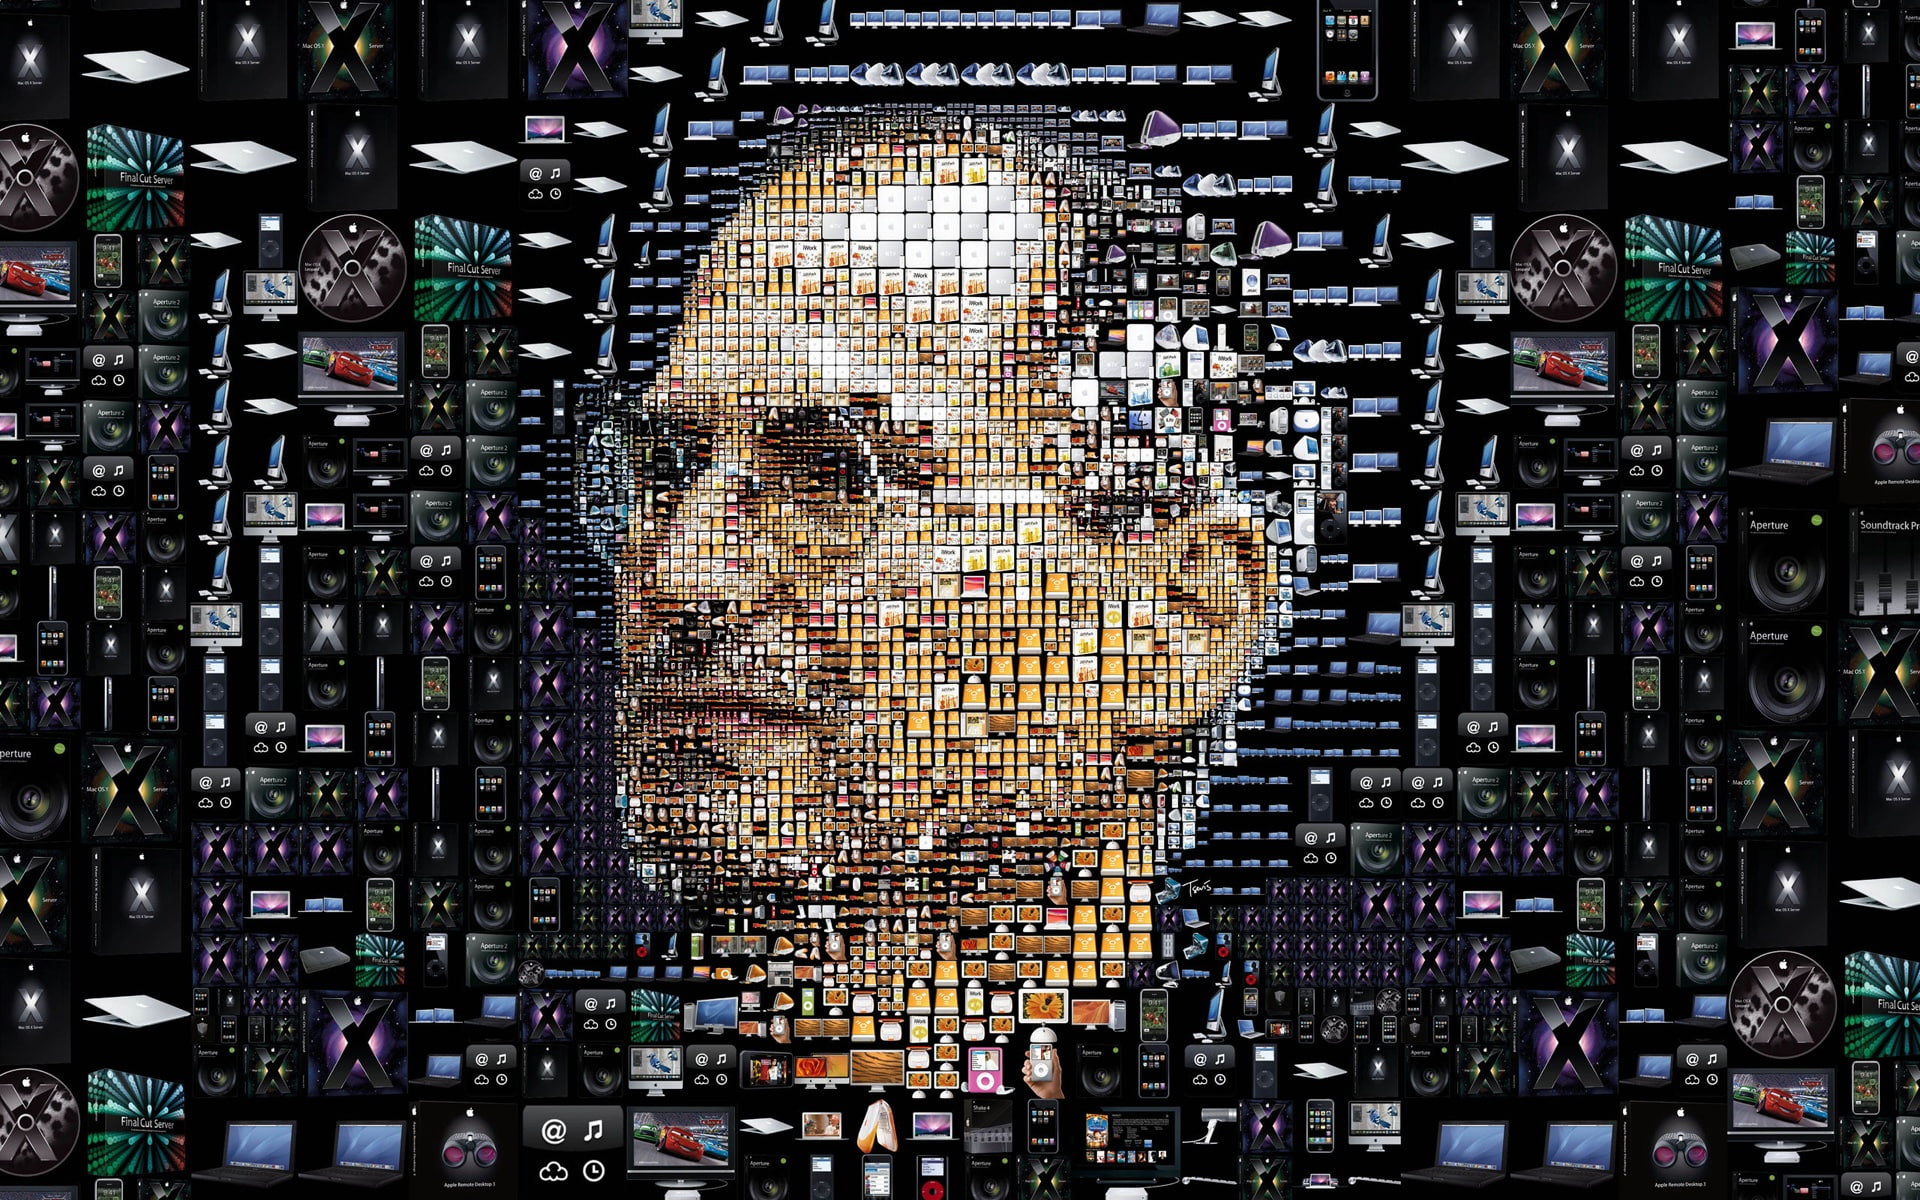 Steve Jobs Commemorative HD, celebrities